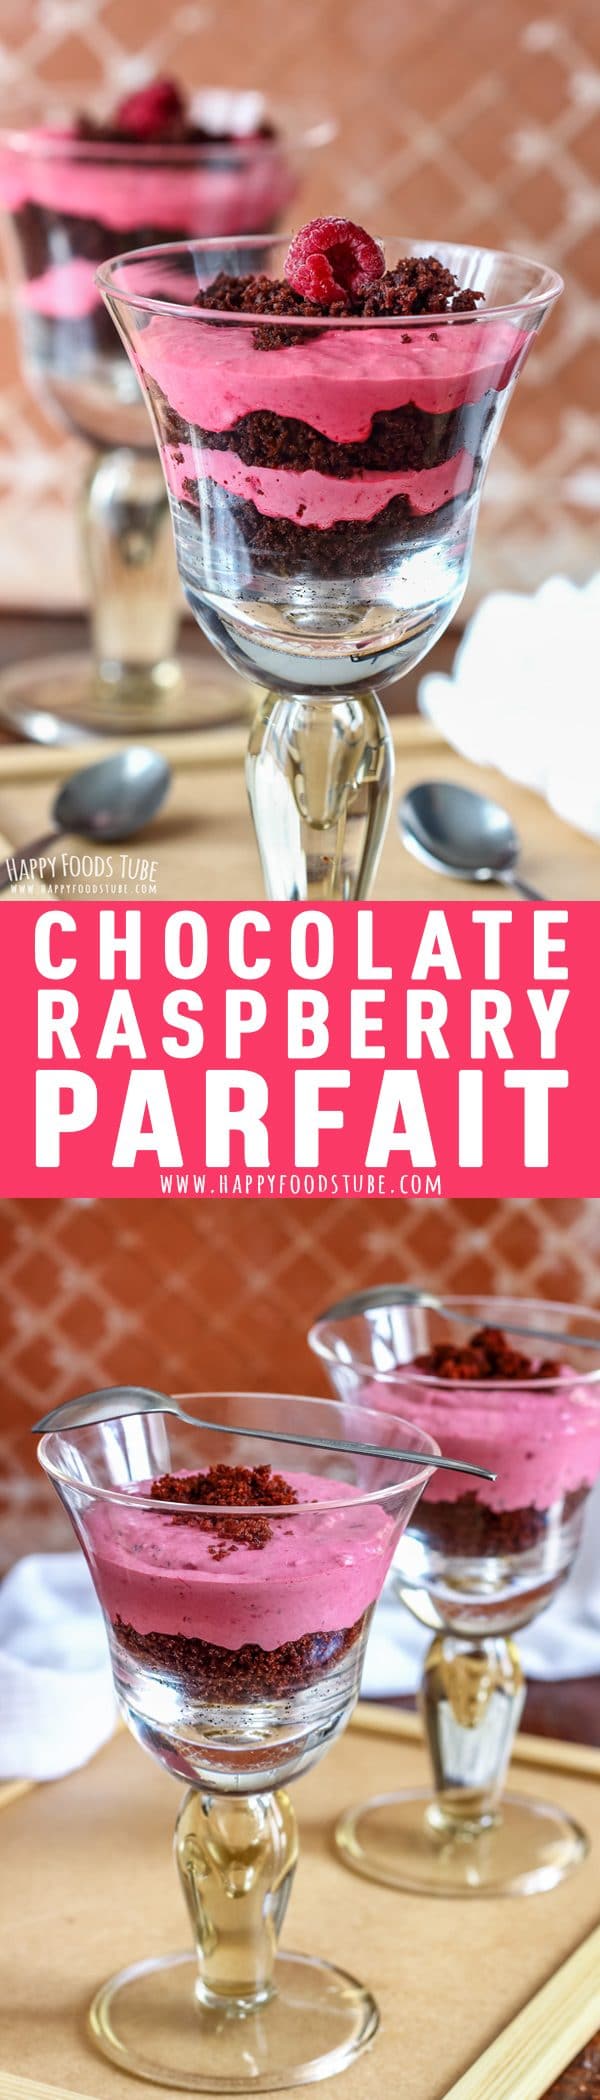 Chocolate Raspberry Parfait Pinterest Collage